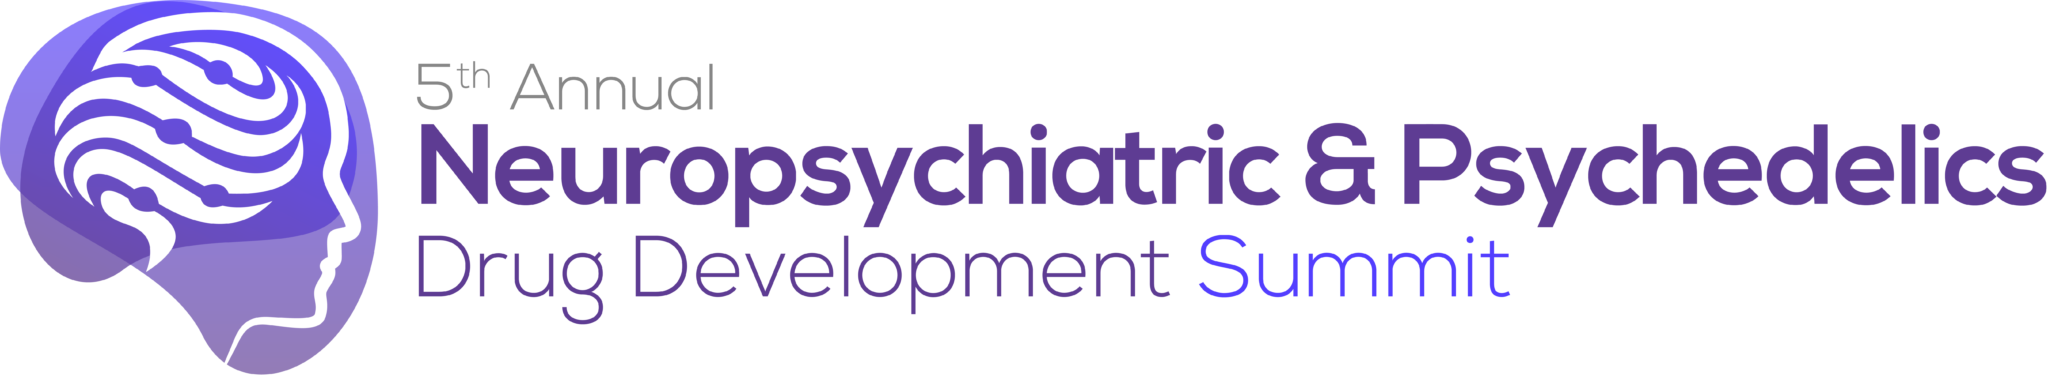 HW220704-5th-Neuropsychiatric-and-Psychedelics-Drug-Development-Summit-logo-FINAL-2048x391